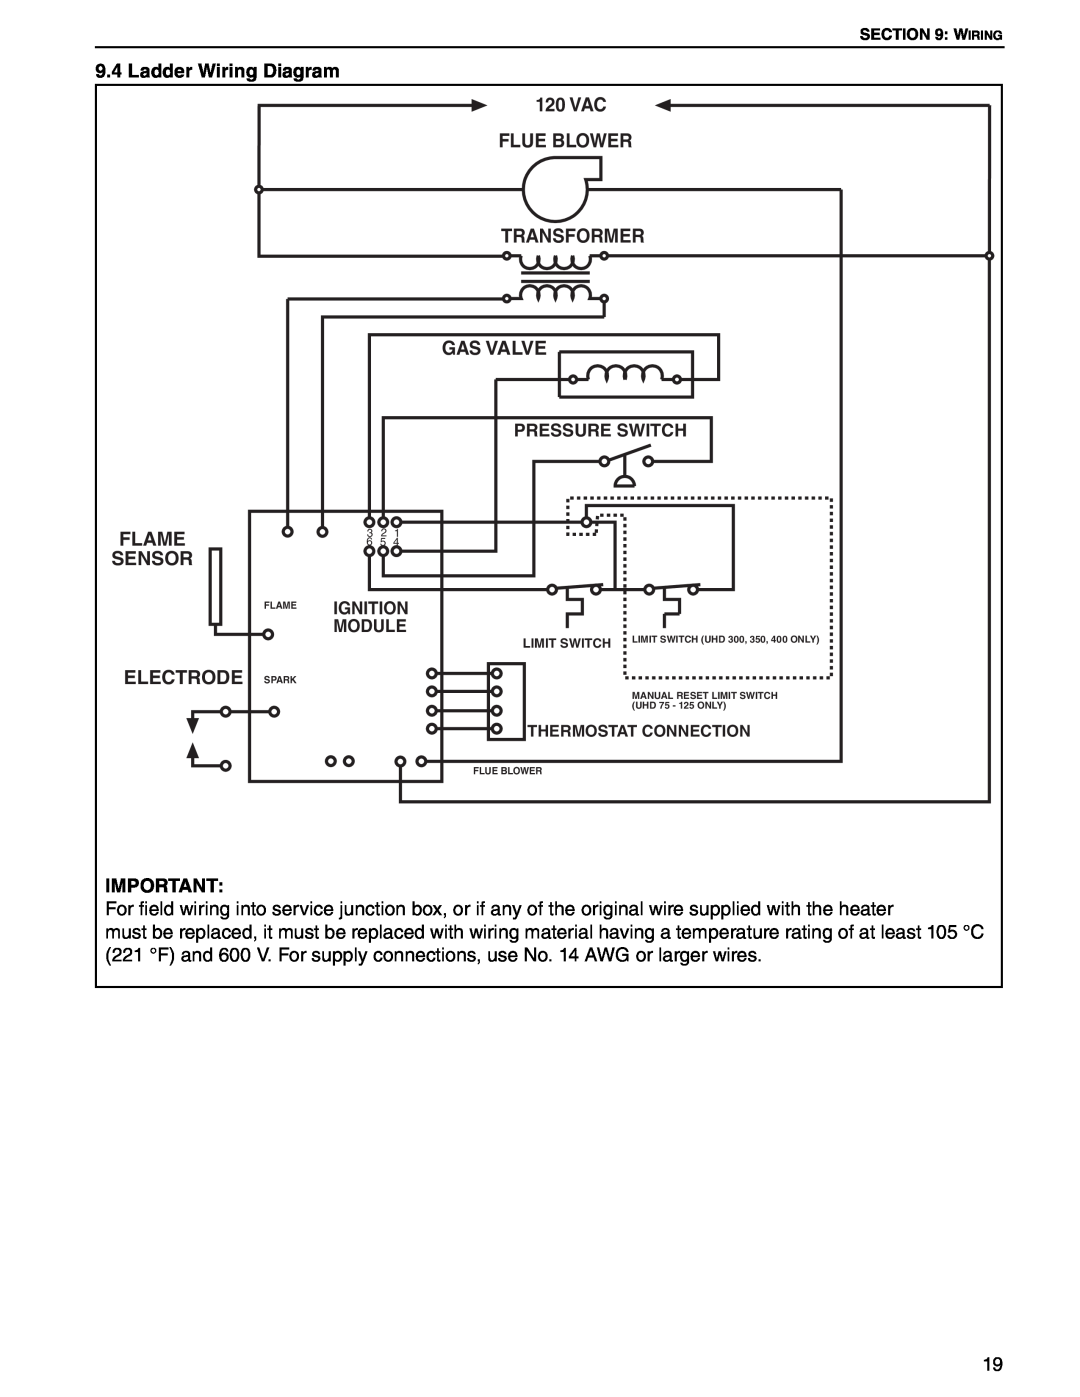 Roberts Gorden UHD[X][S][R] 250 Ladder Wiring Diagram, Vac Flue Blower Transformer Gas Valve, Flame Sensor Electrode 